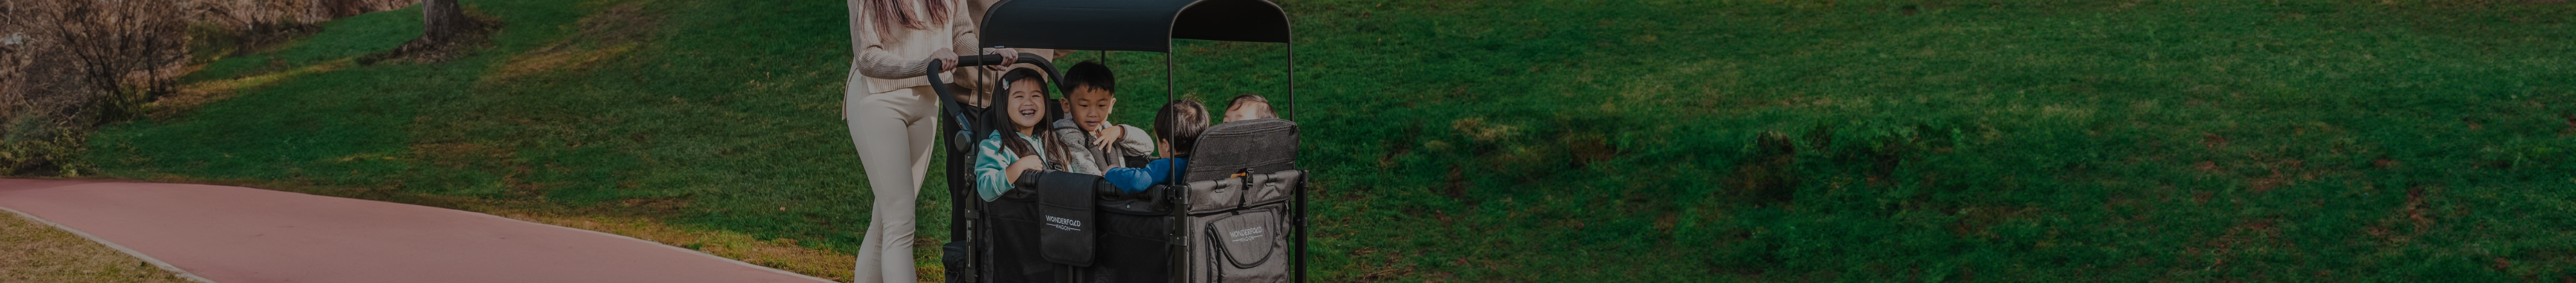 Parent pushing 4 kids in a Wonderfold all-terrain wagon